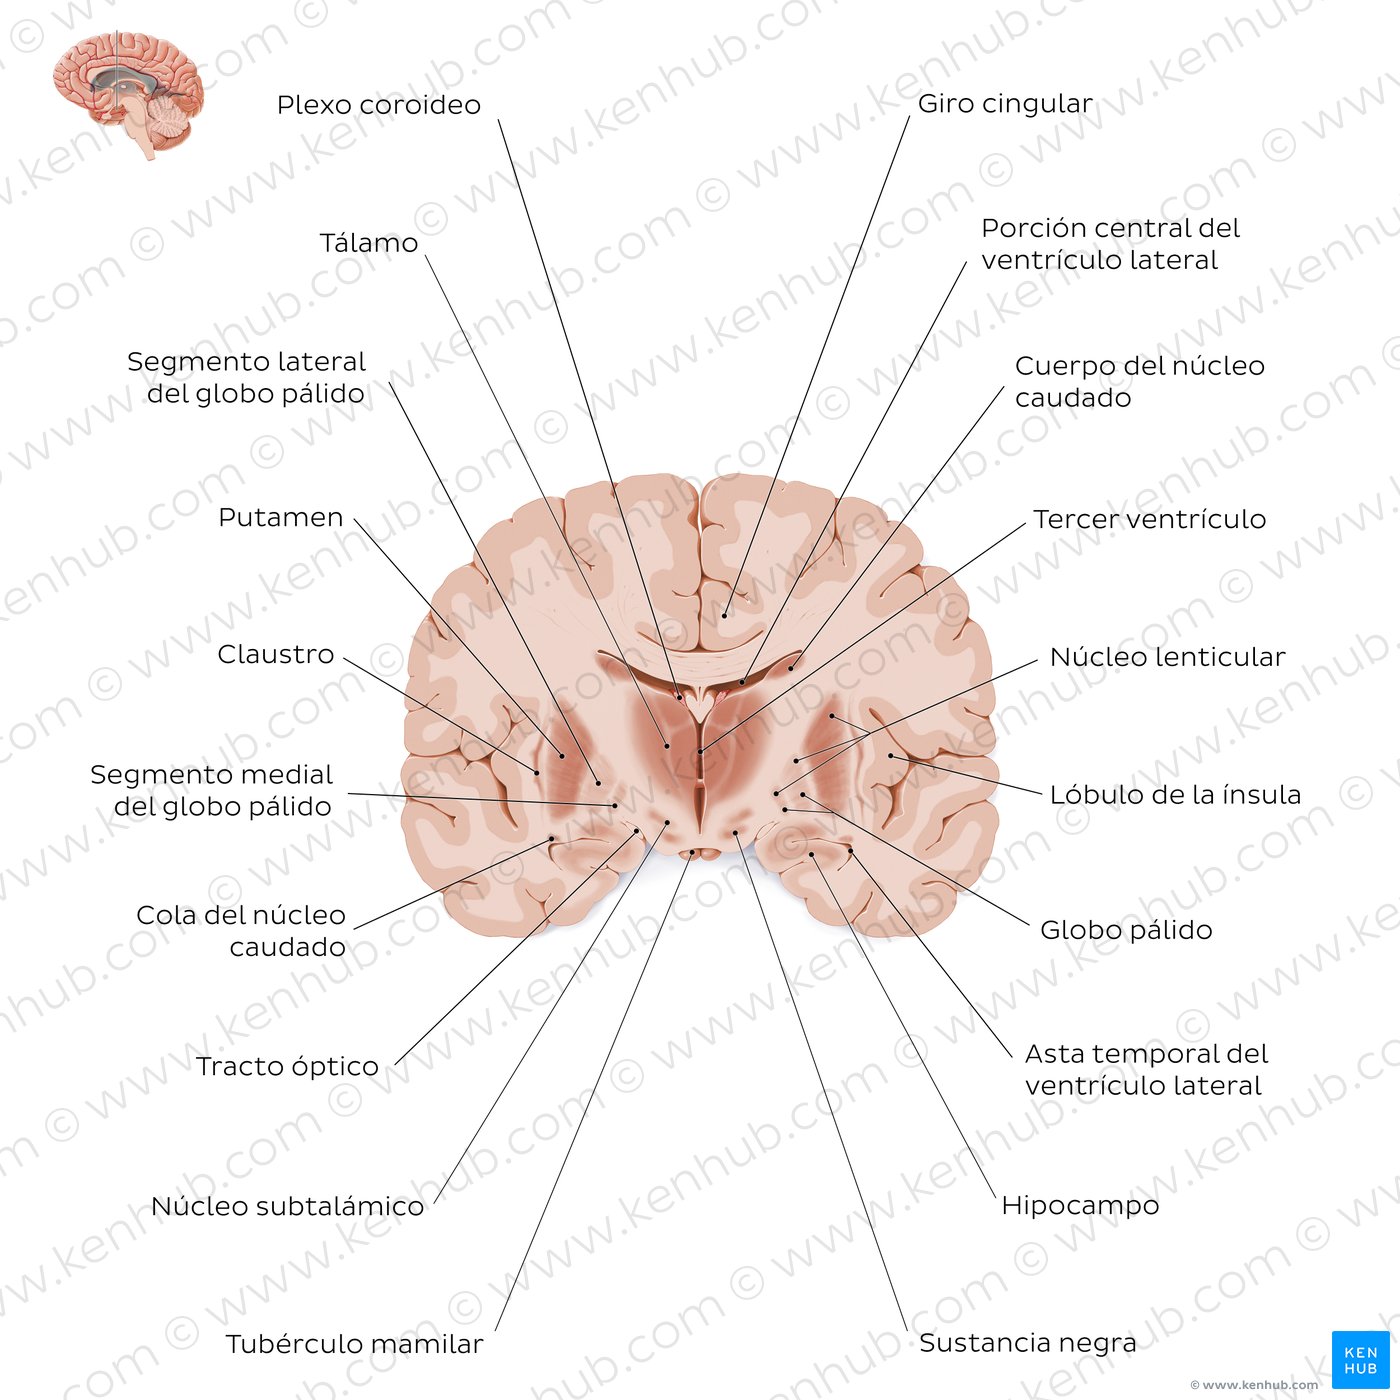 Corte coronal del encéfalo (a nivel del tálamo): Estructuras de sustancia gris